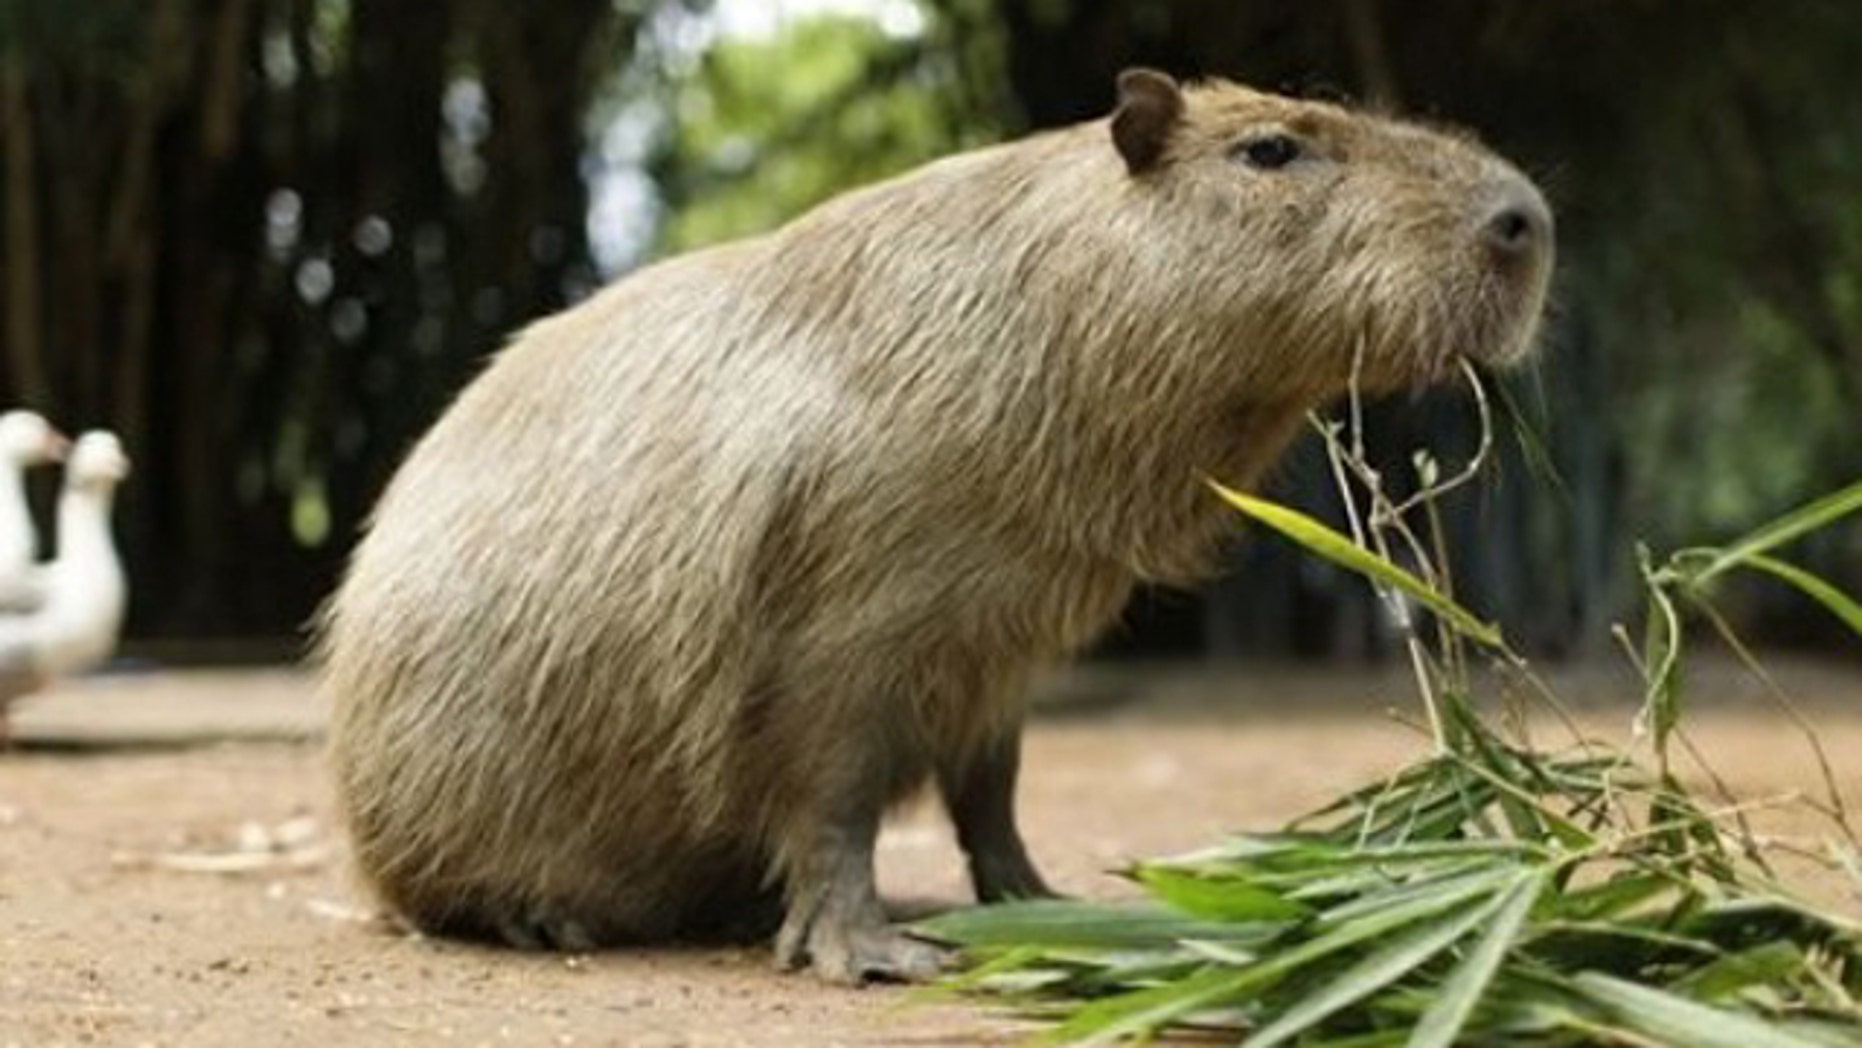 capybara plant based kitchen bar ridgewood ny 11385